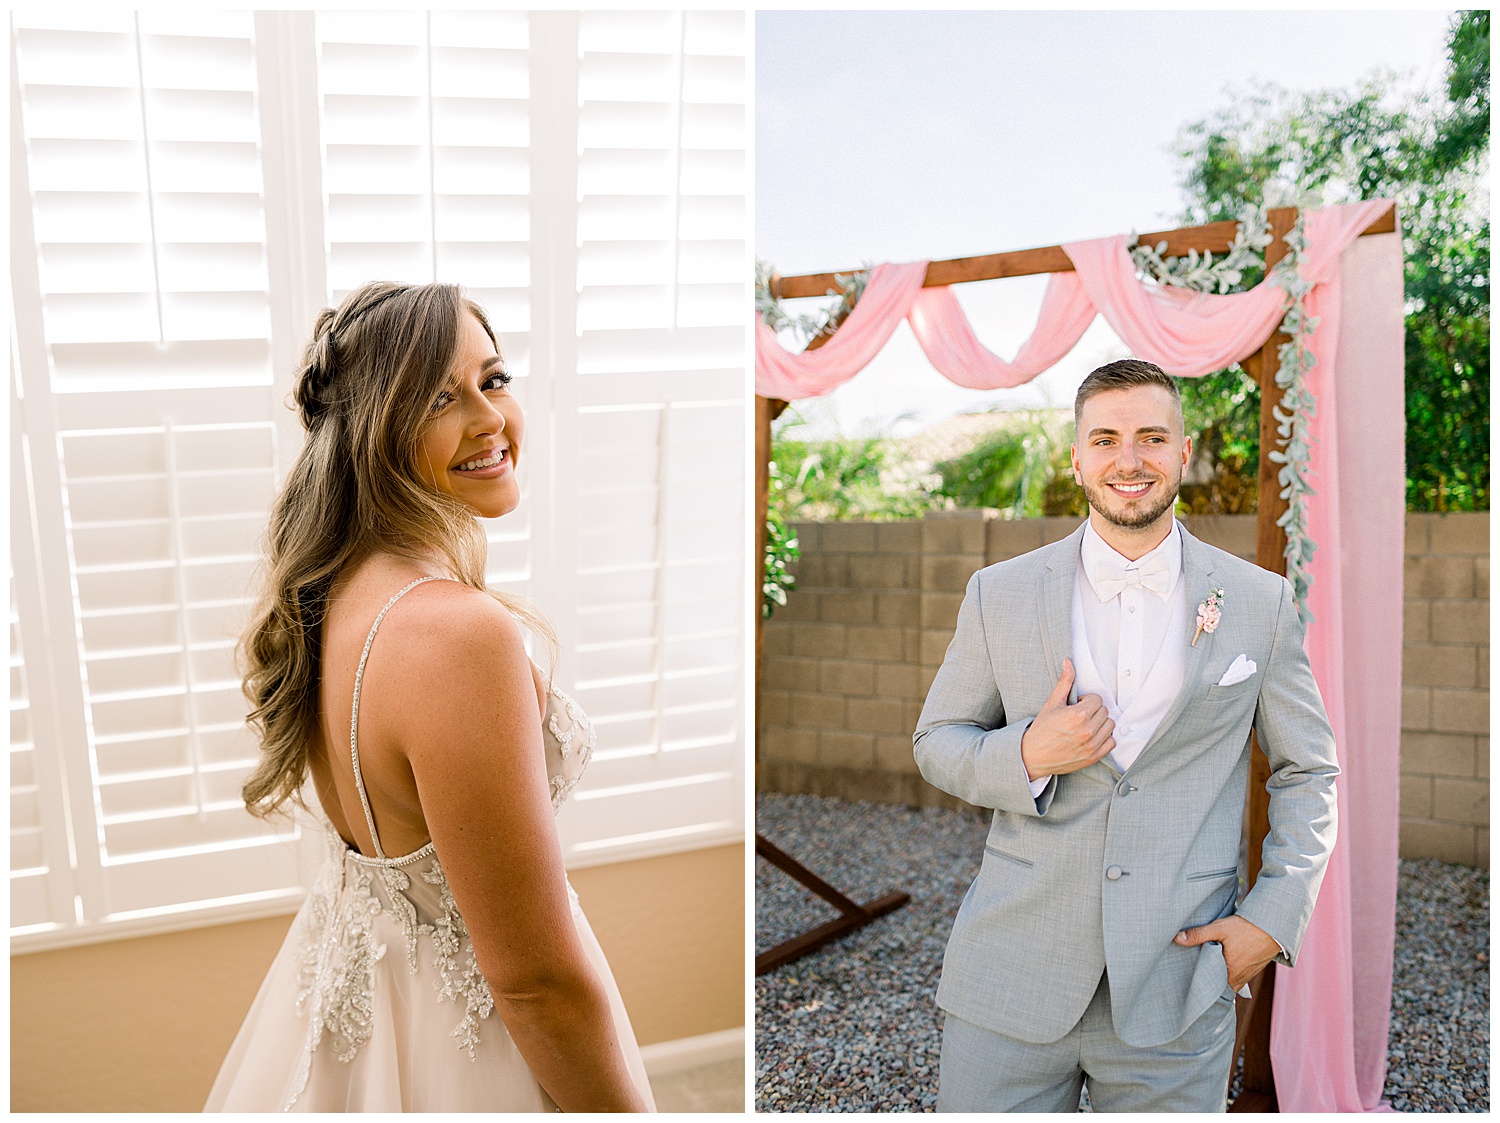 Intimate Estate Wedding, Arizona bridals and groom portraits